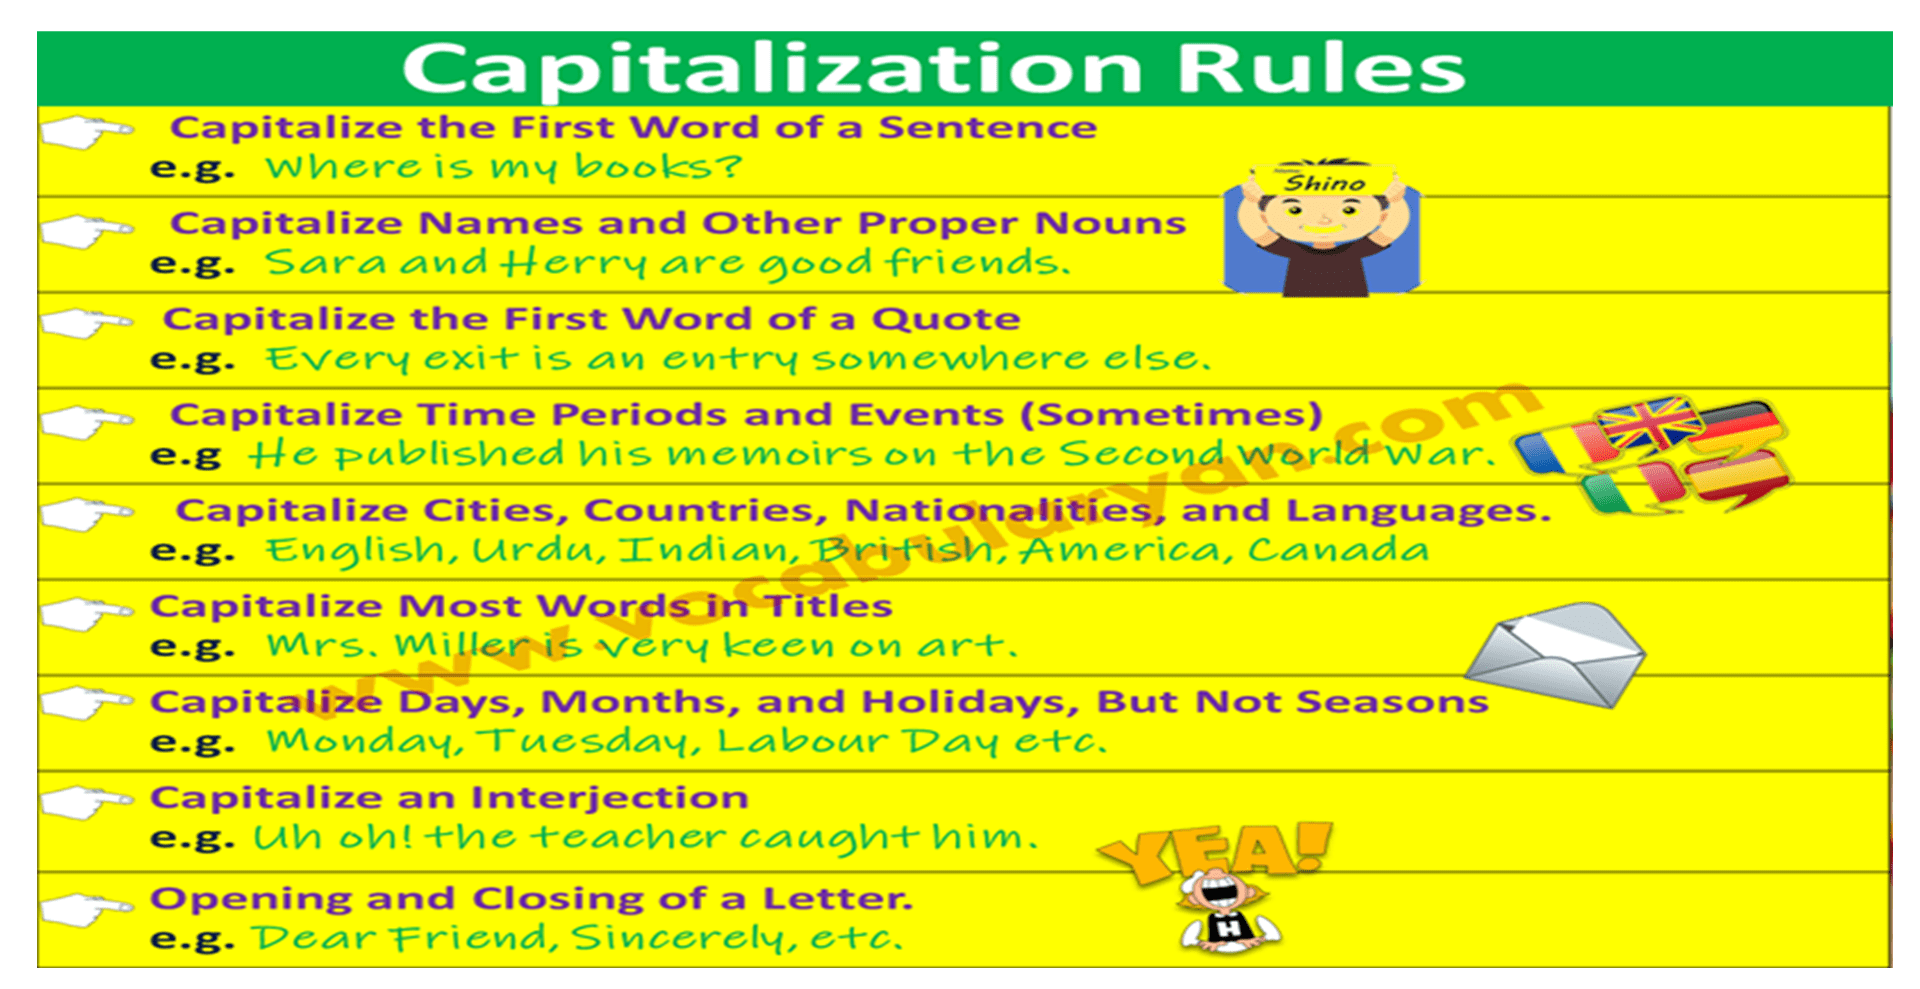 capitalization of transaction costs u.s. gaap